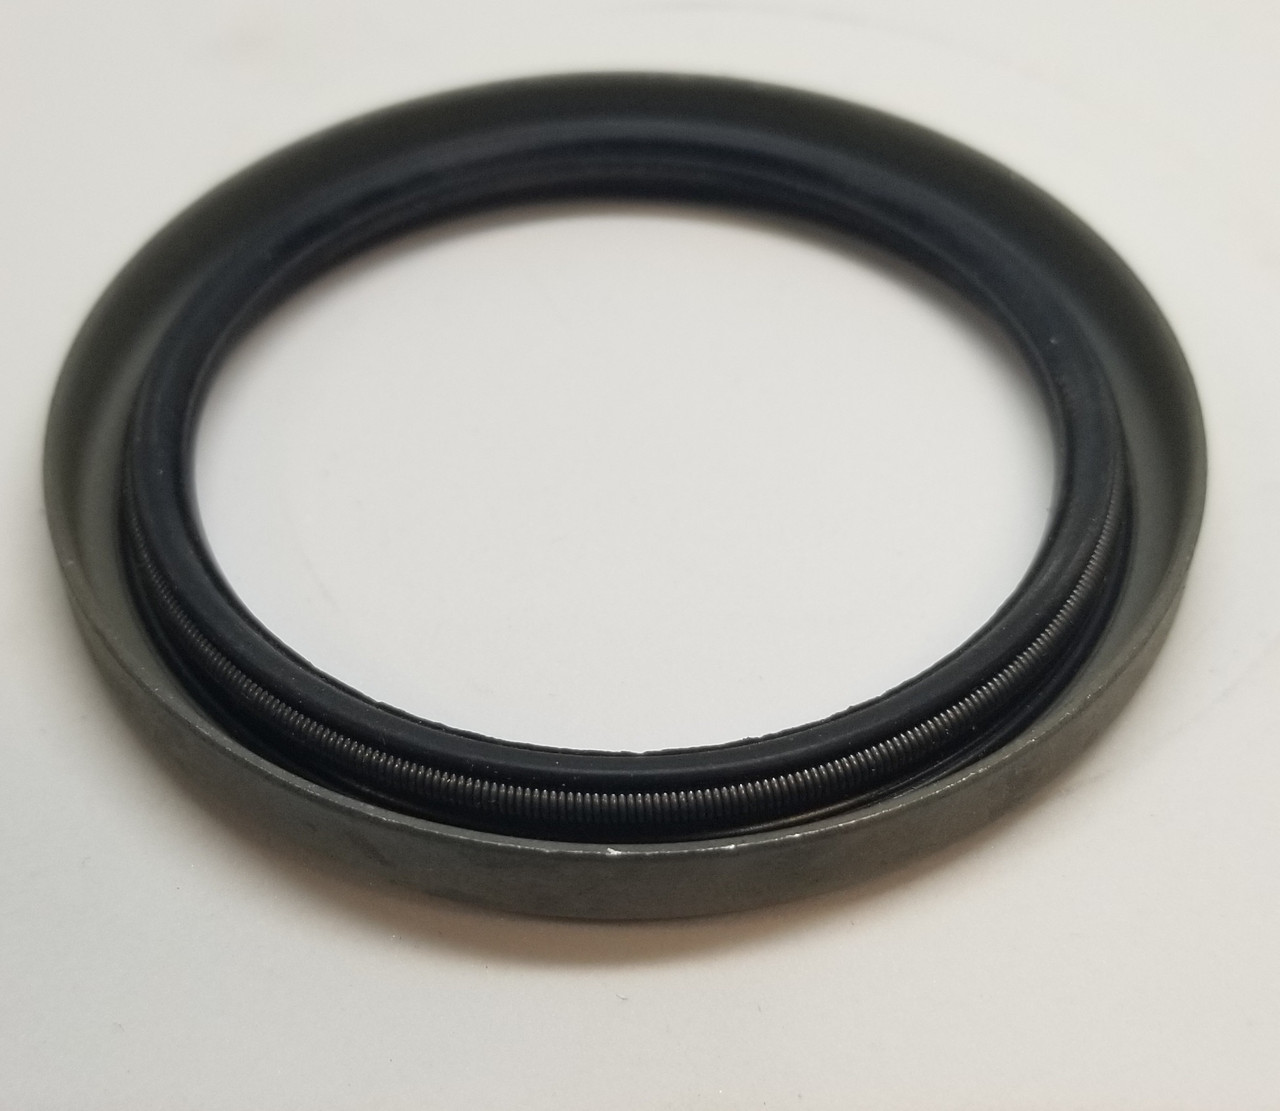 0.969" (24.61mm) Inch Metal Single Lip Nitrile Oil Seal  9613 CRW1 R